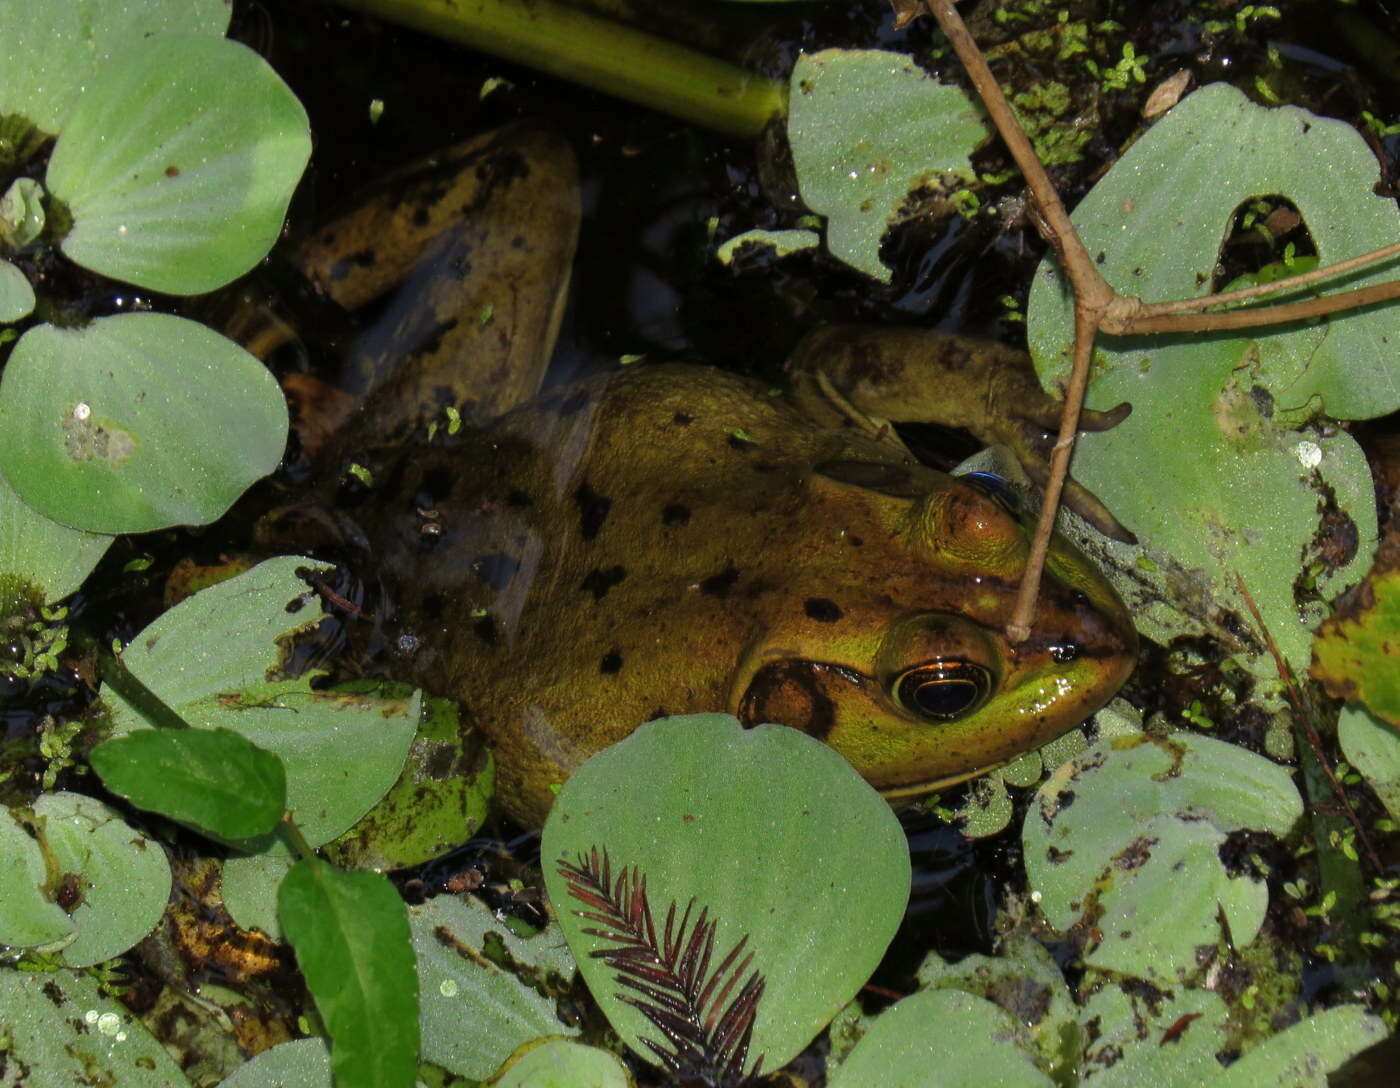 Image of Pig Frog